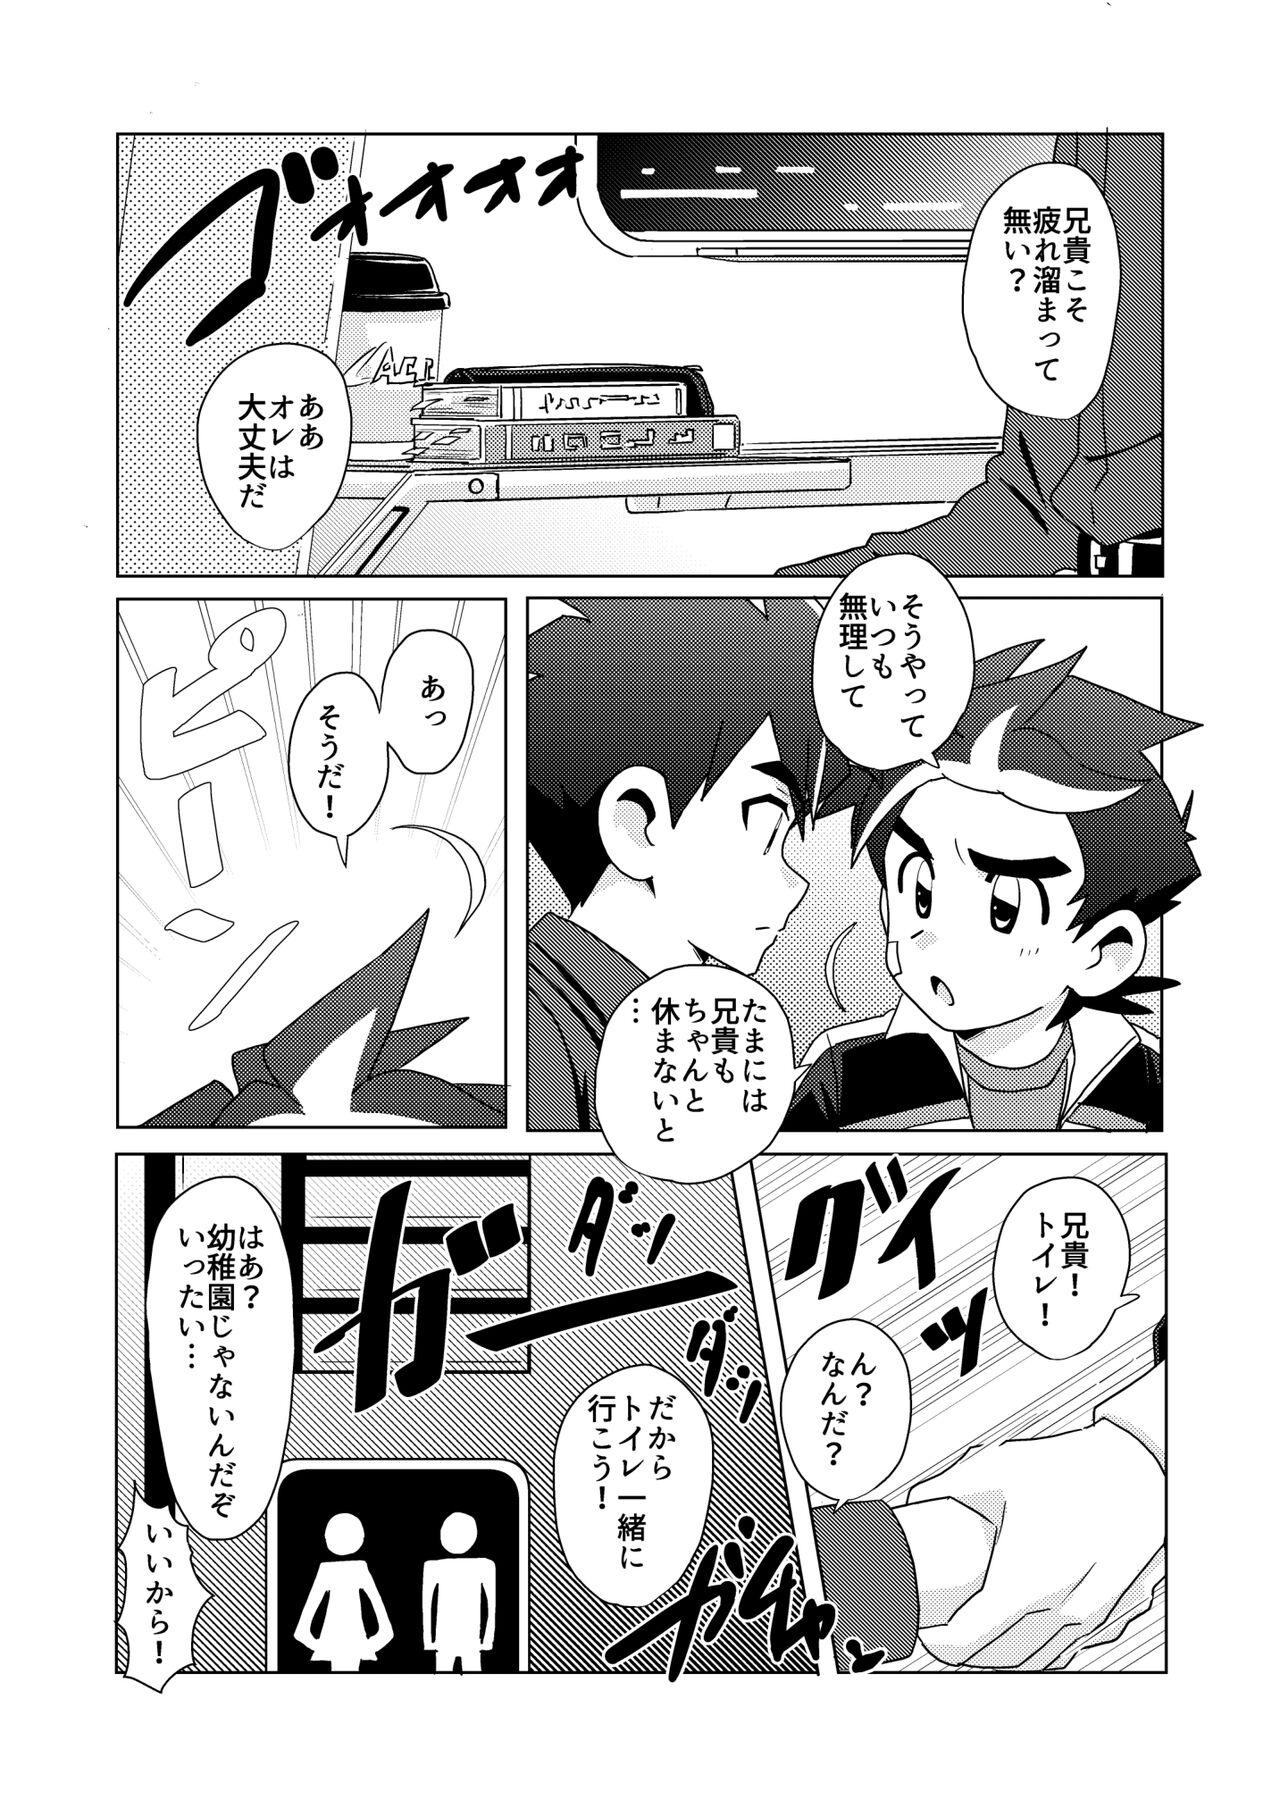 Roleplay DRAGON BROTHERS - Shinkansen henkei robo shinkalion Alternative - Page 5